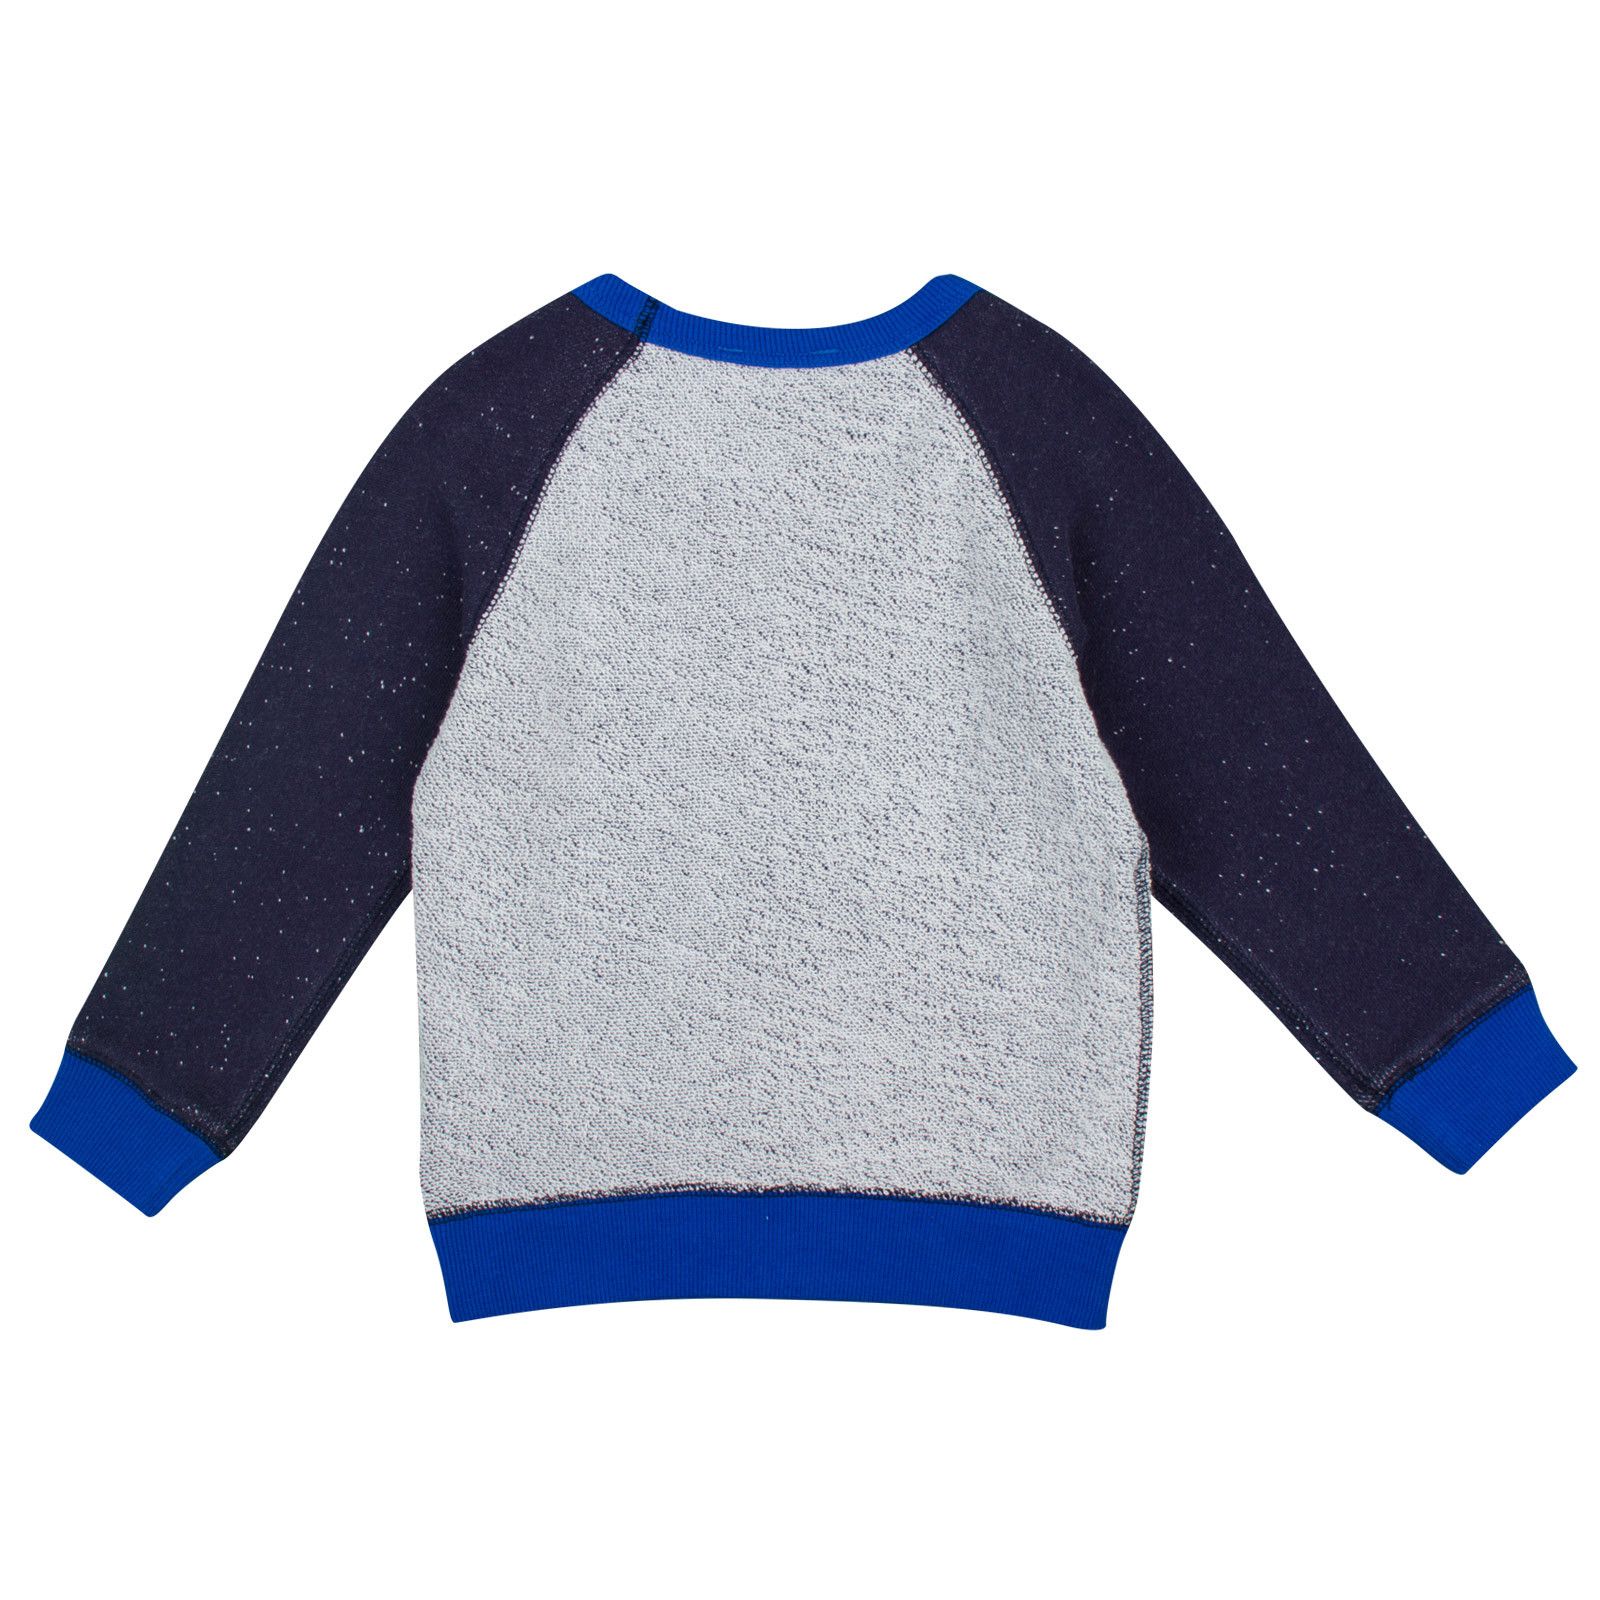 Boys Grey&Blue 'Mr Marc' Spaceman Printed Sweater - CÉMAROSE | Children's Fashion Store - 2